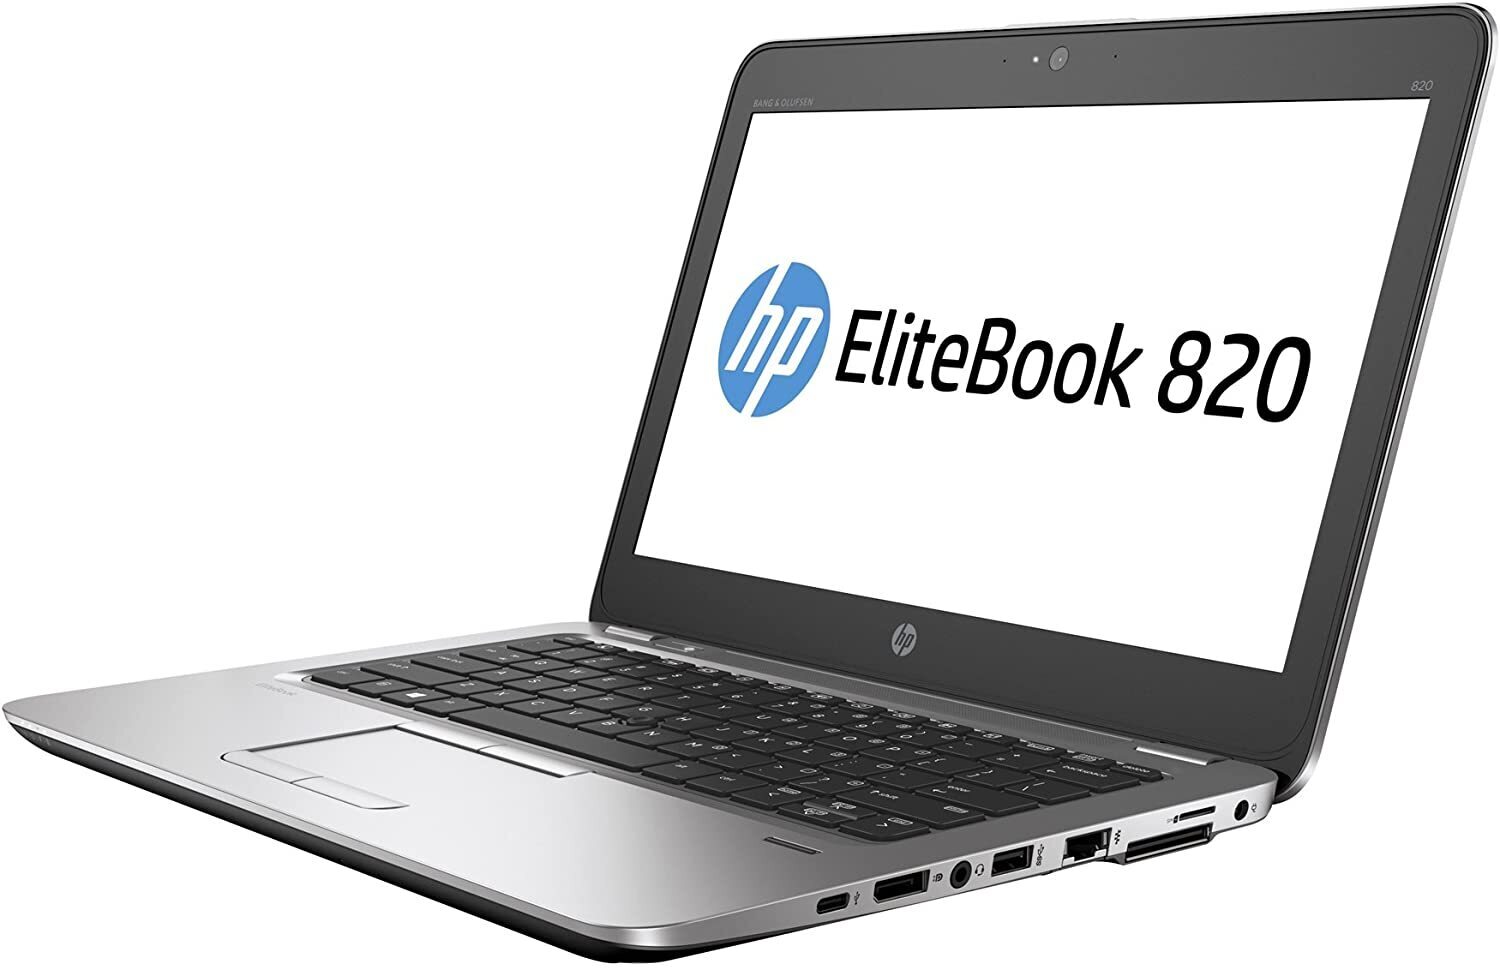 HP EliteBook 820 G3 Intel i5 6300U 2.40GHz 8GB RAM 128GB SSD 12.5" Win 10 - B Grade Image 2